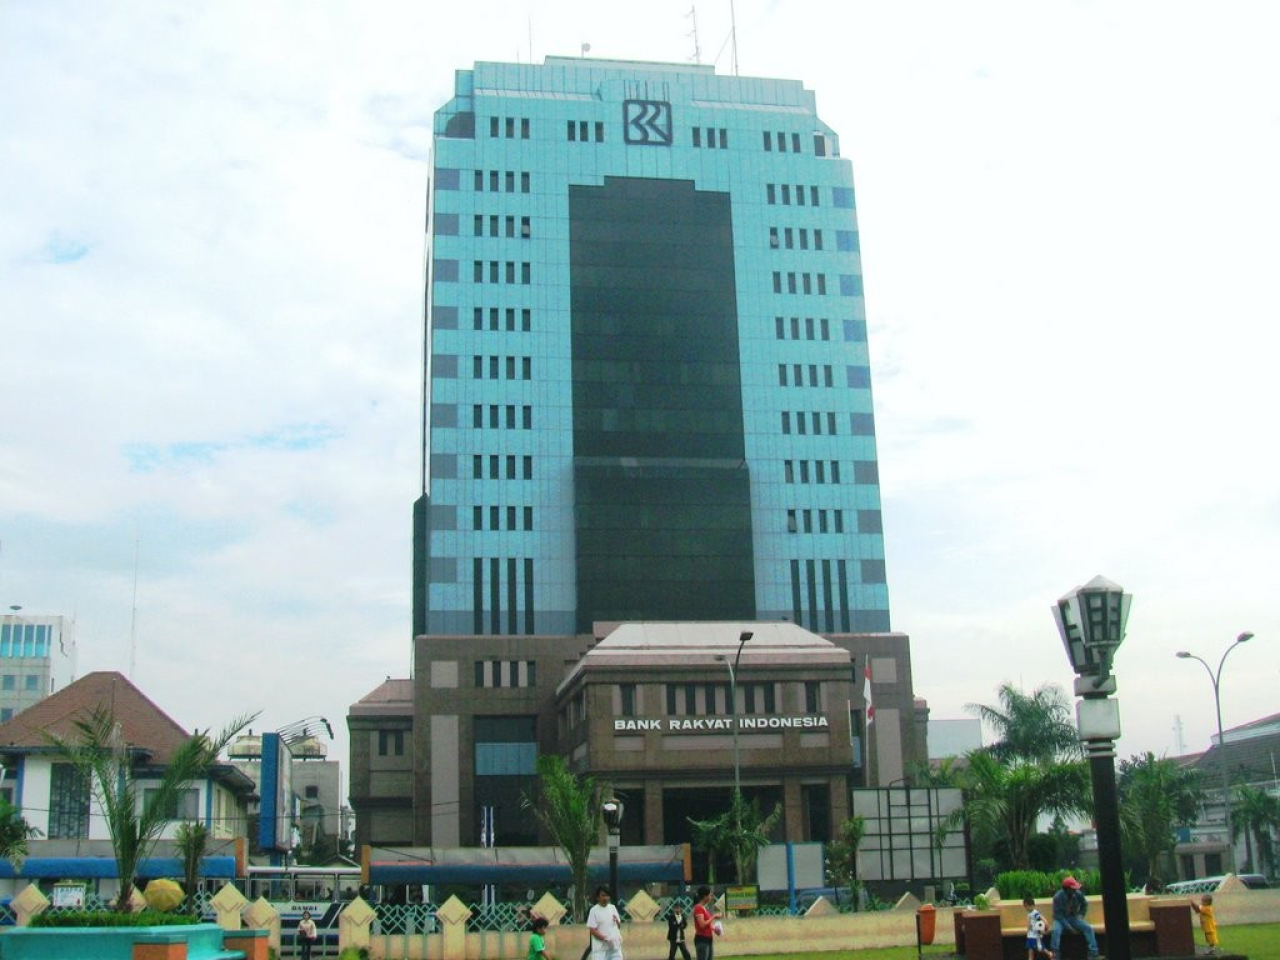 Pojok Loker Lowongan Kerja PT Bank Rakyat Indonesia, Yuk Daftar!